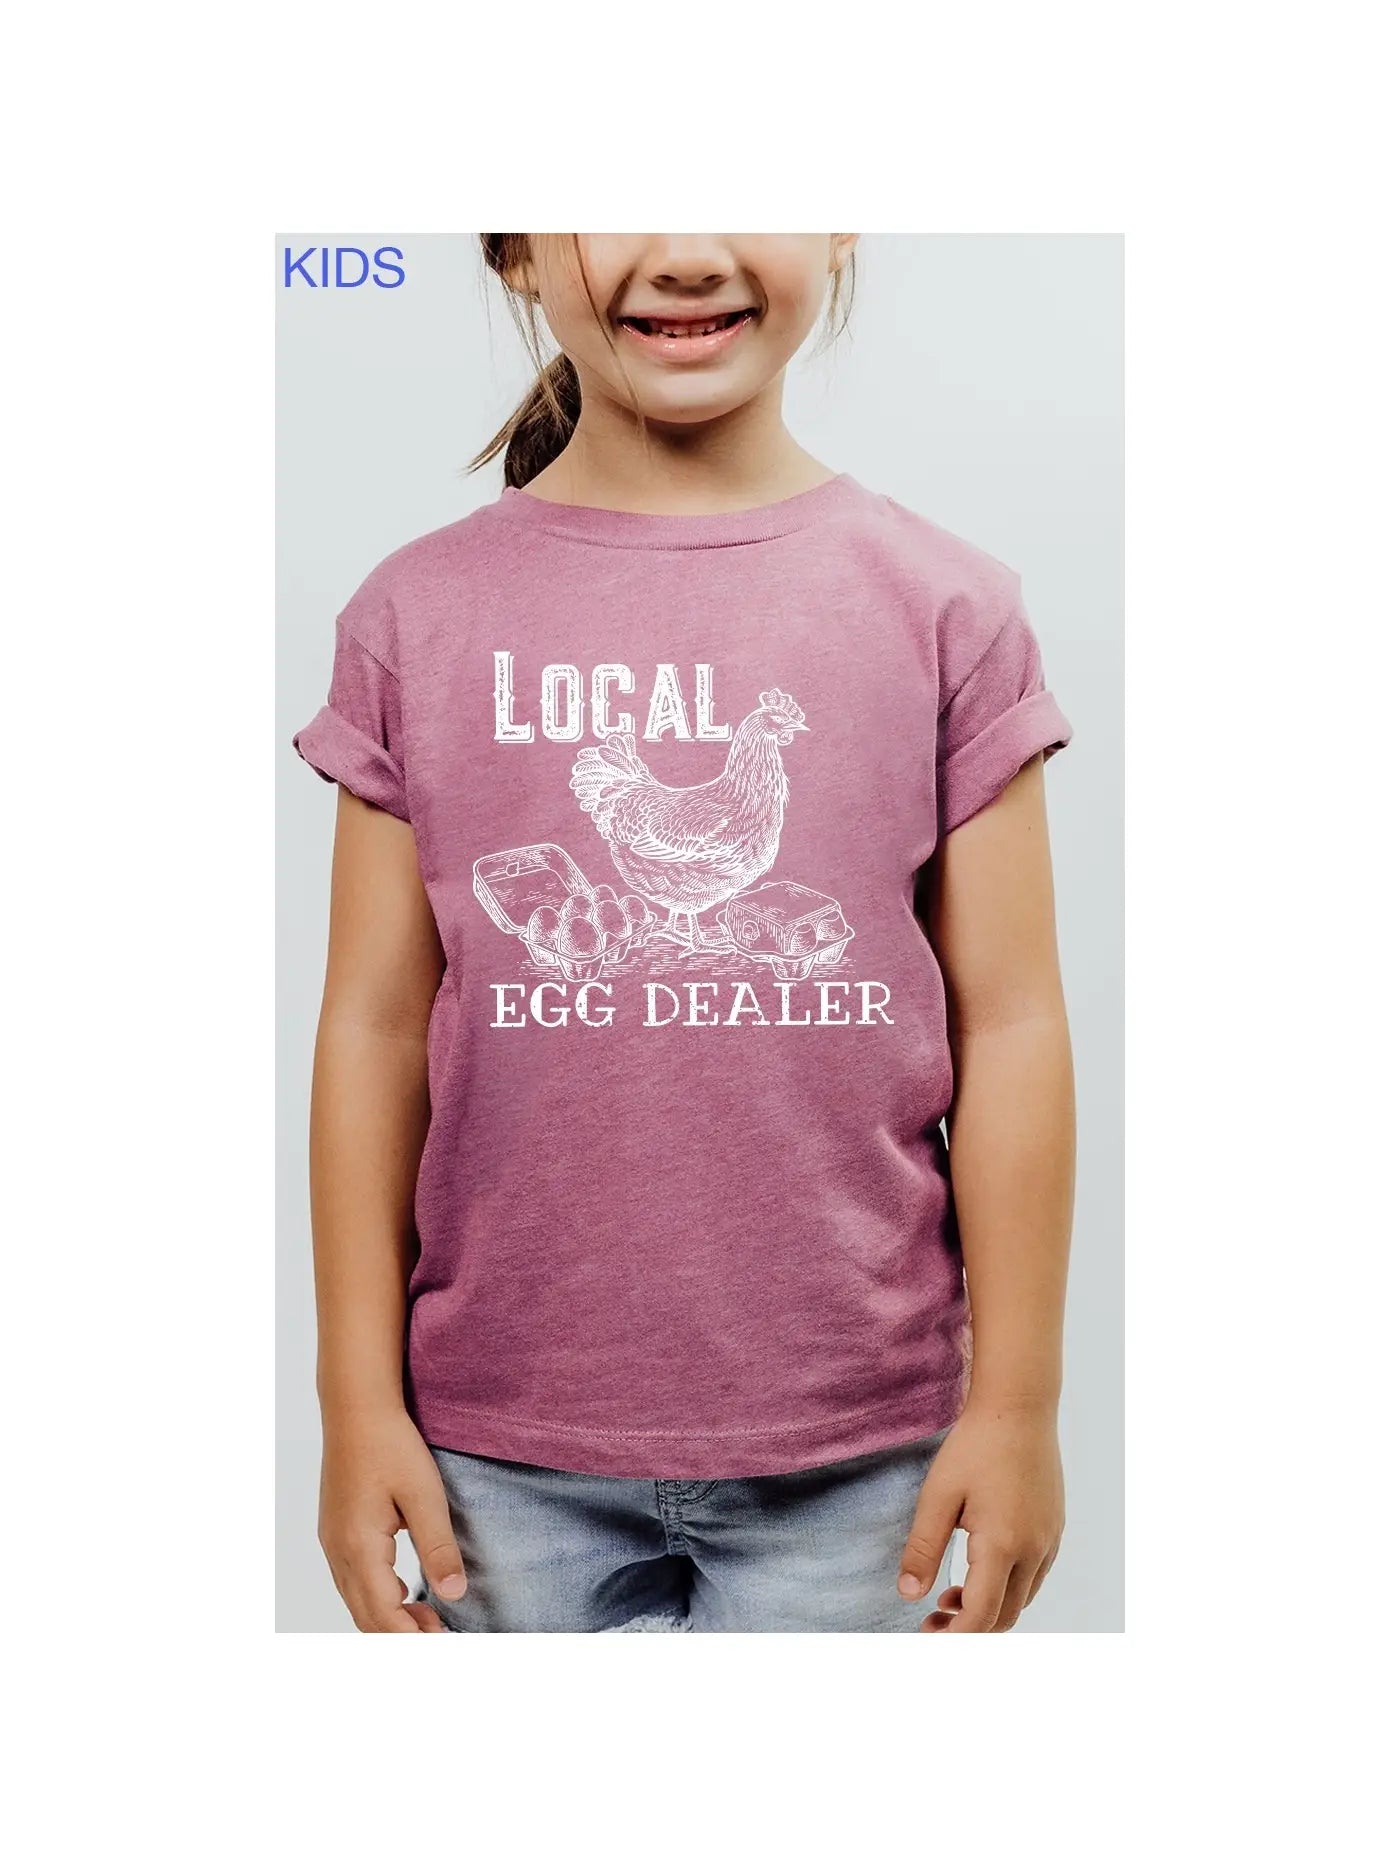 Local Egg Dealer Kids Graphic Tshirt